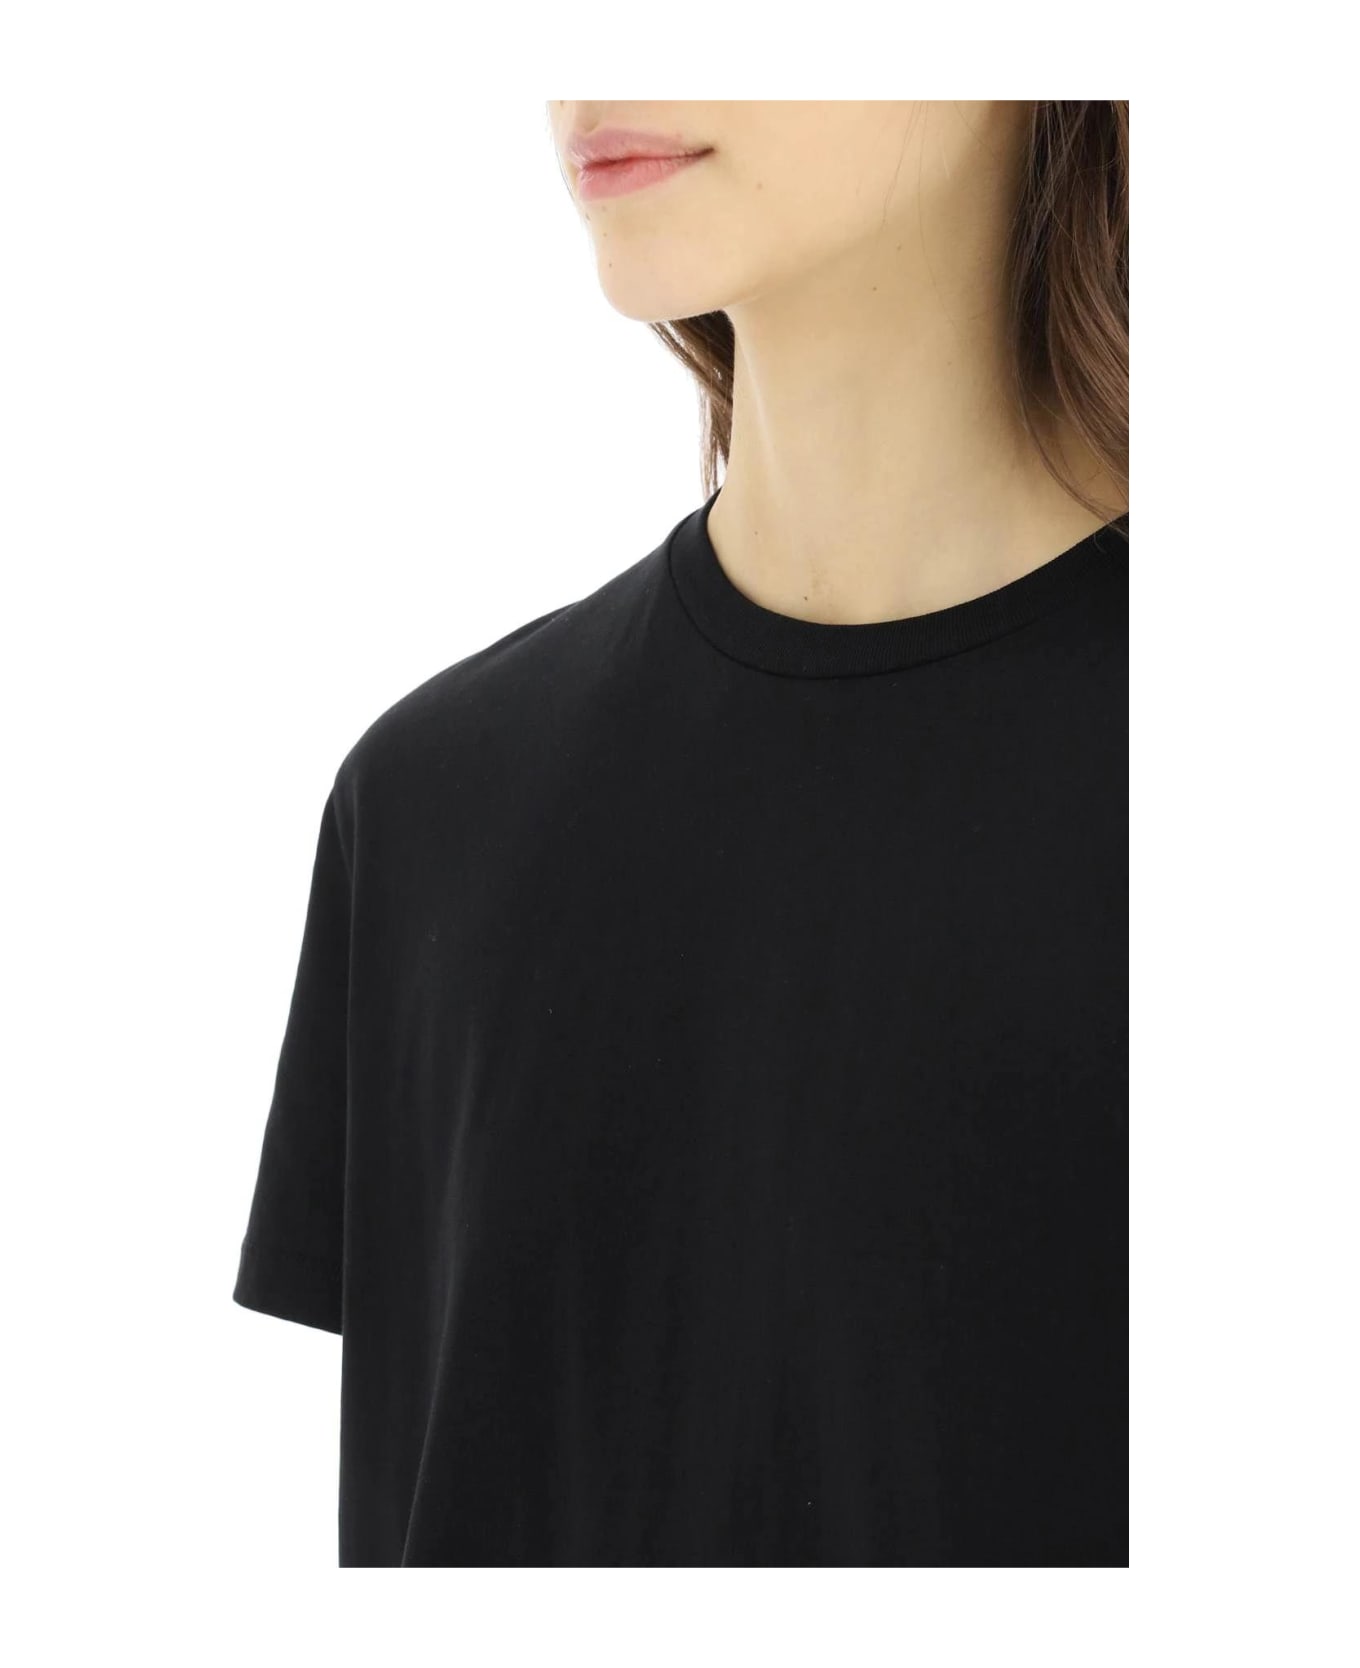 WARDROBE.NYC Basic Cotton T-shirt - Blk Black Tシャツ